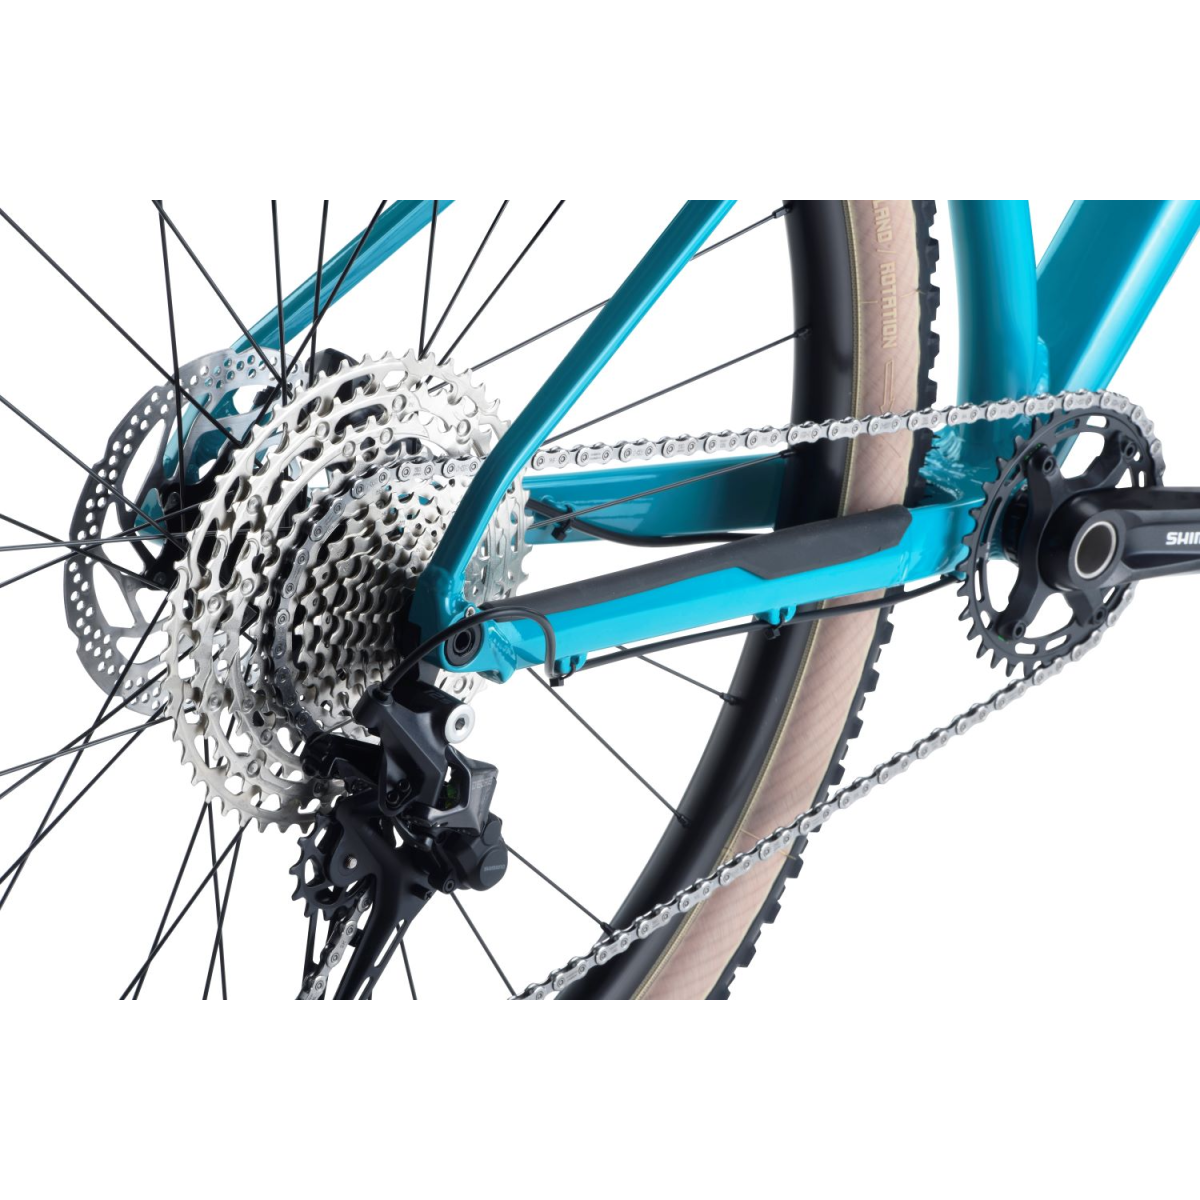 BMC Twostroke AL Two kalnų dviratis / Turquoise - Black